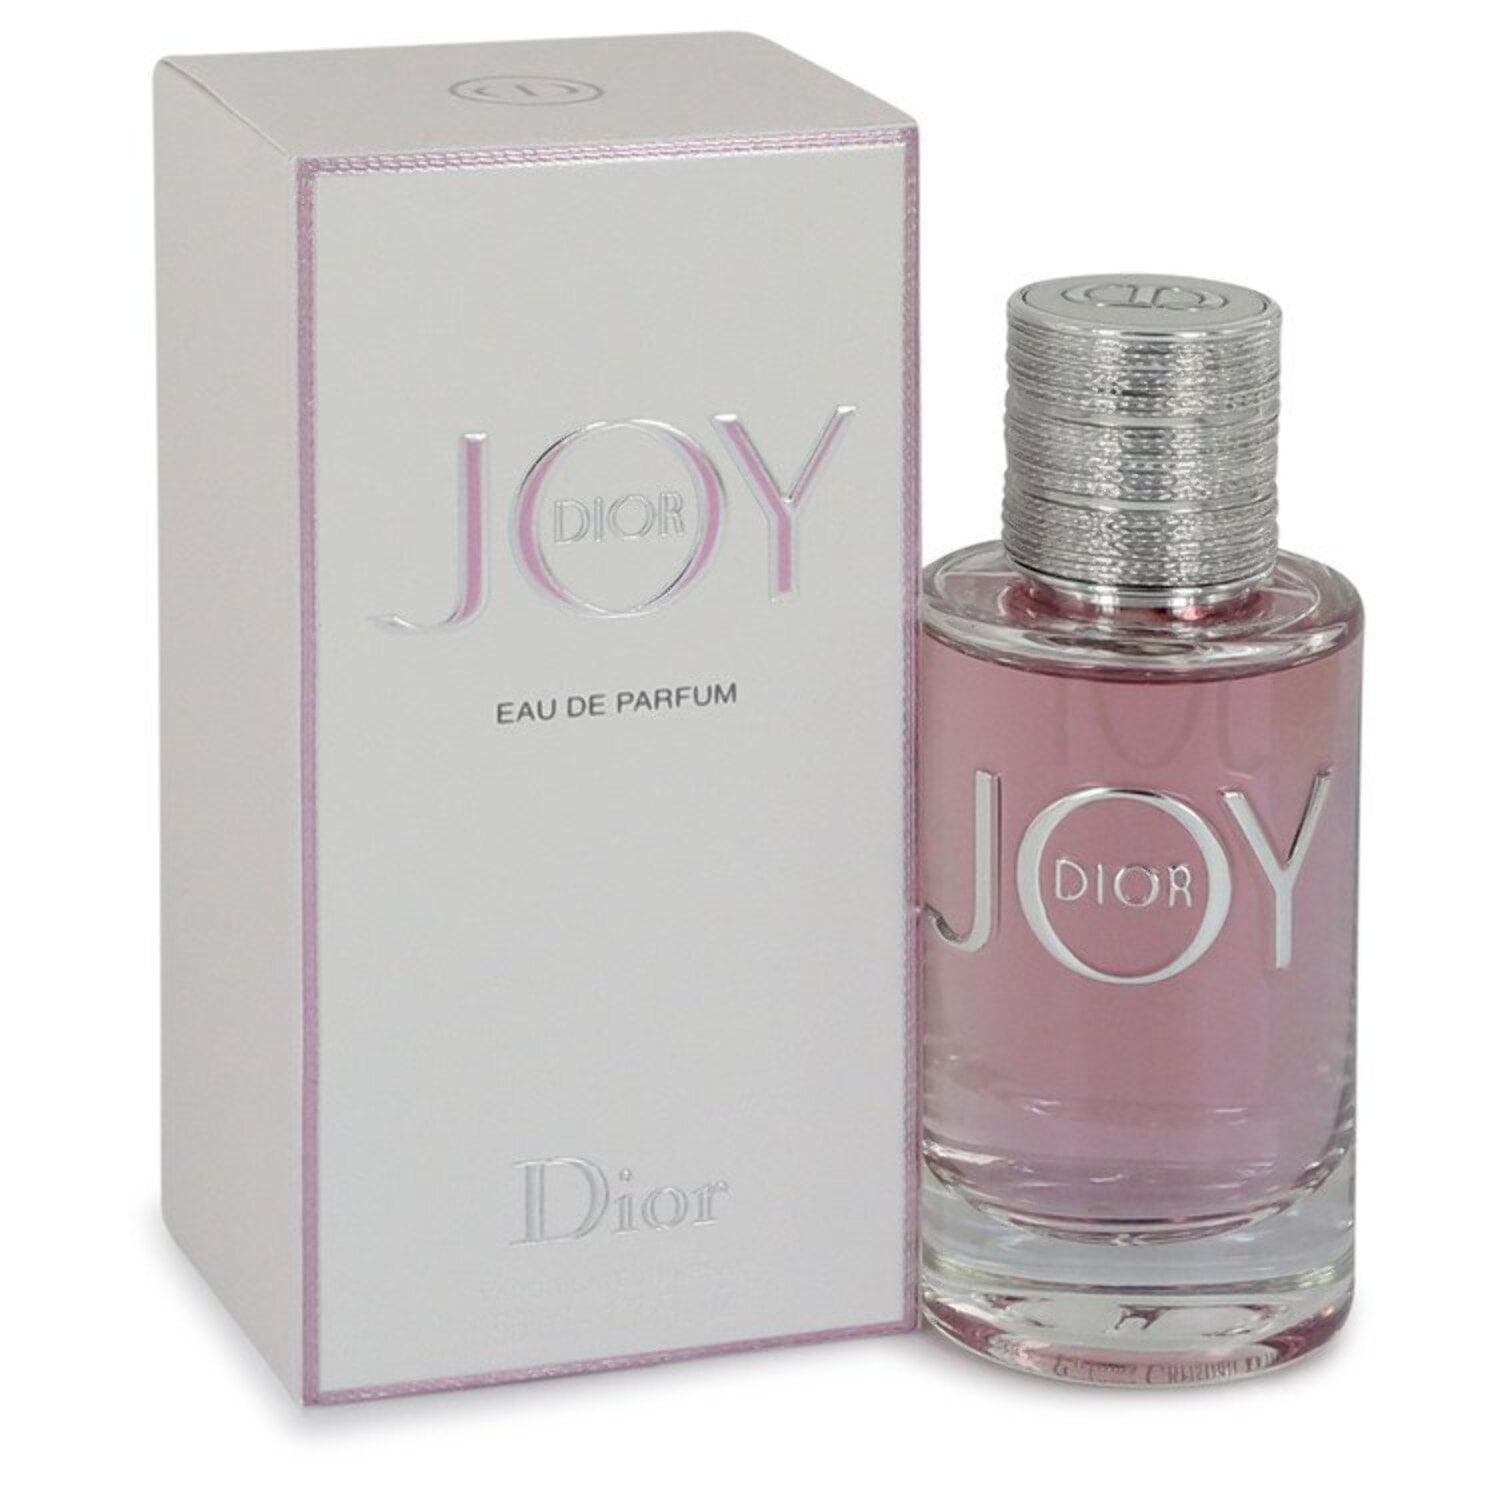 gasformig indsats Brød Dior Joy Eau De Parfum, Perfume for Women, 1.7 Oz - Walmart.com